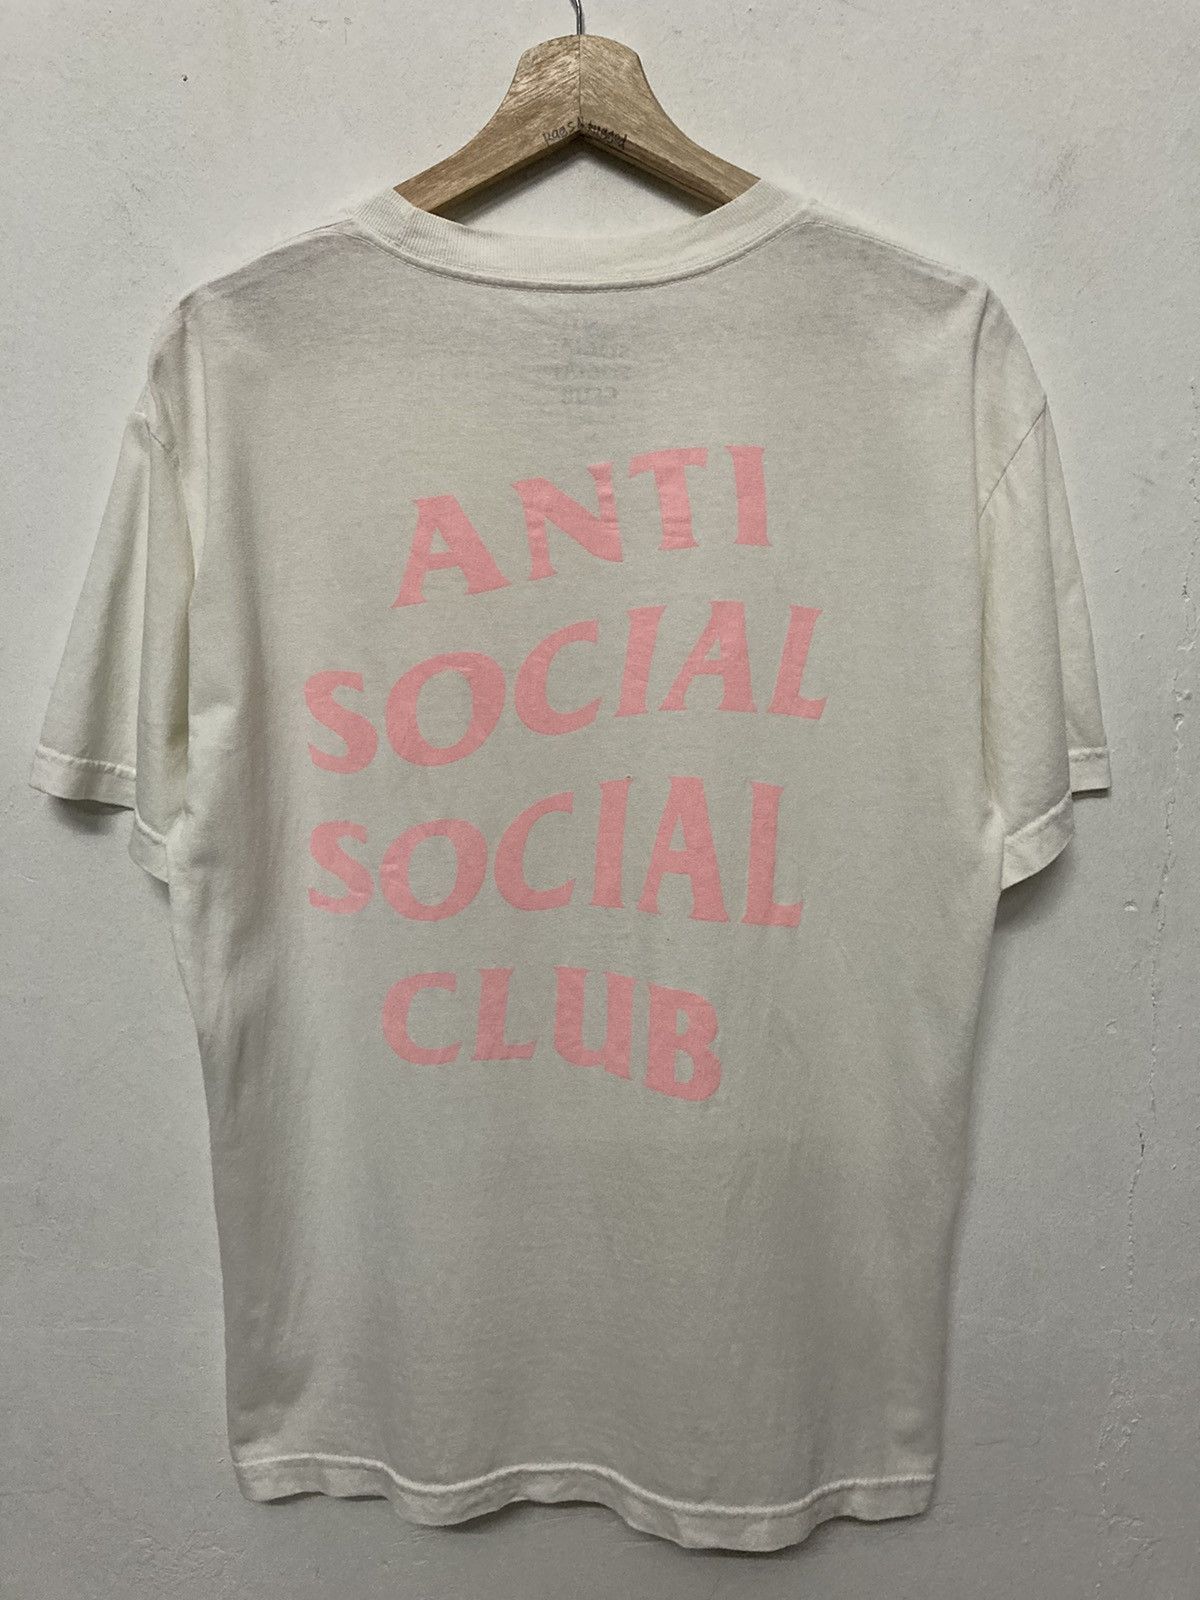 Anti Social Social Club - ASSC T shirt - 2